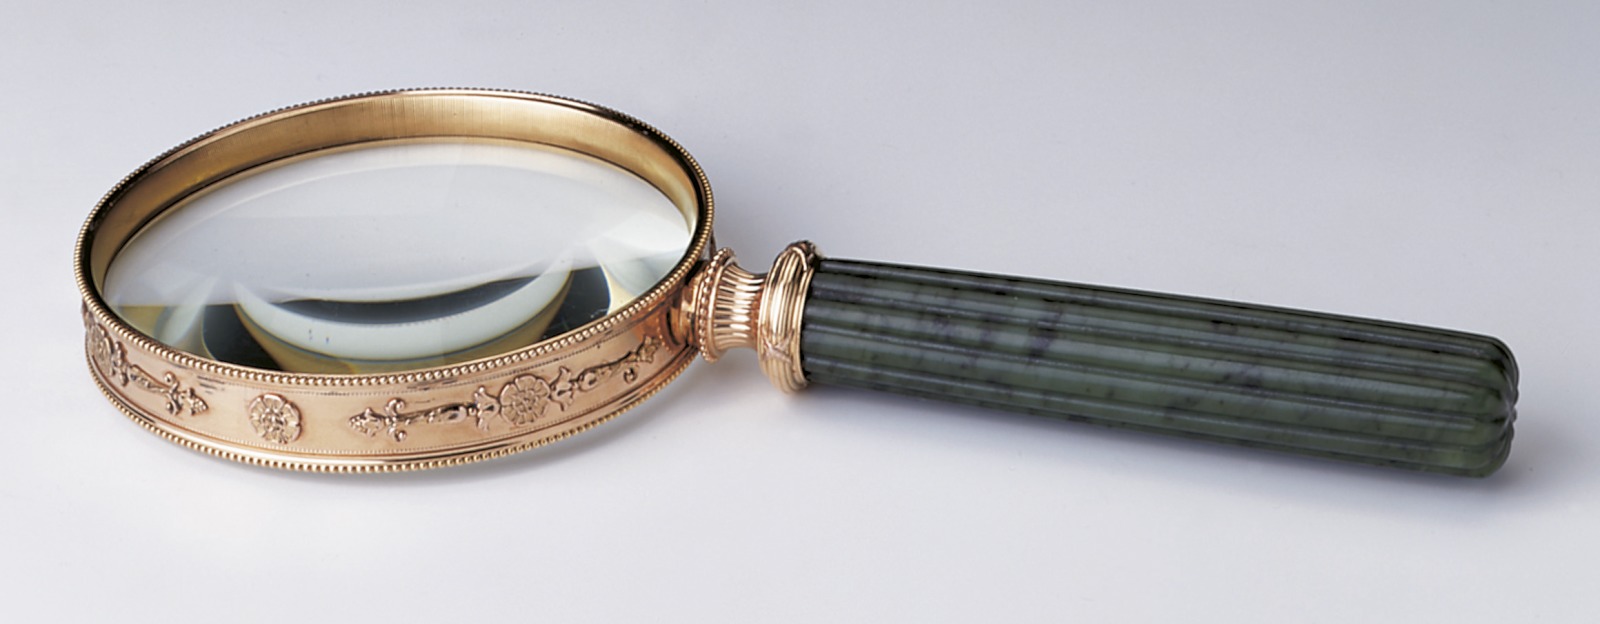 Henrik Immanuel Wigström (1862-1923), Magnifying glass (RCIN 38805)